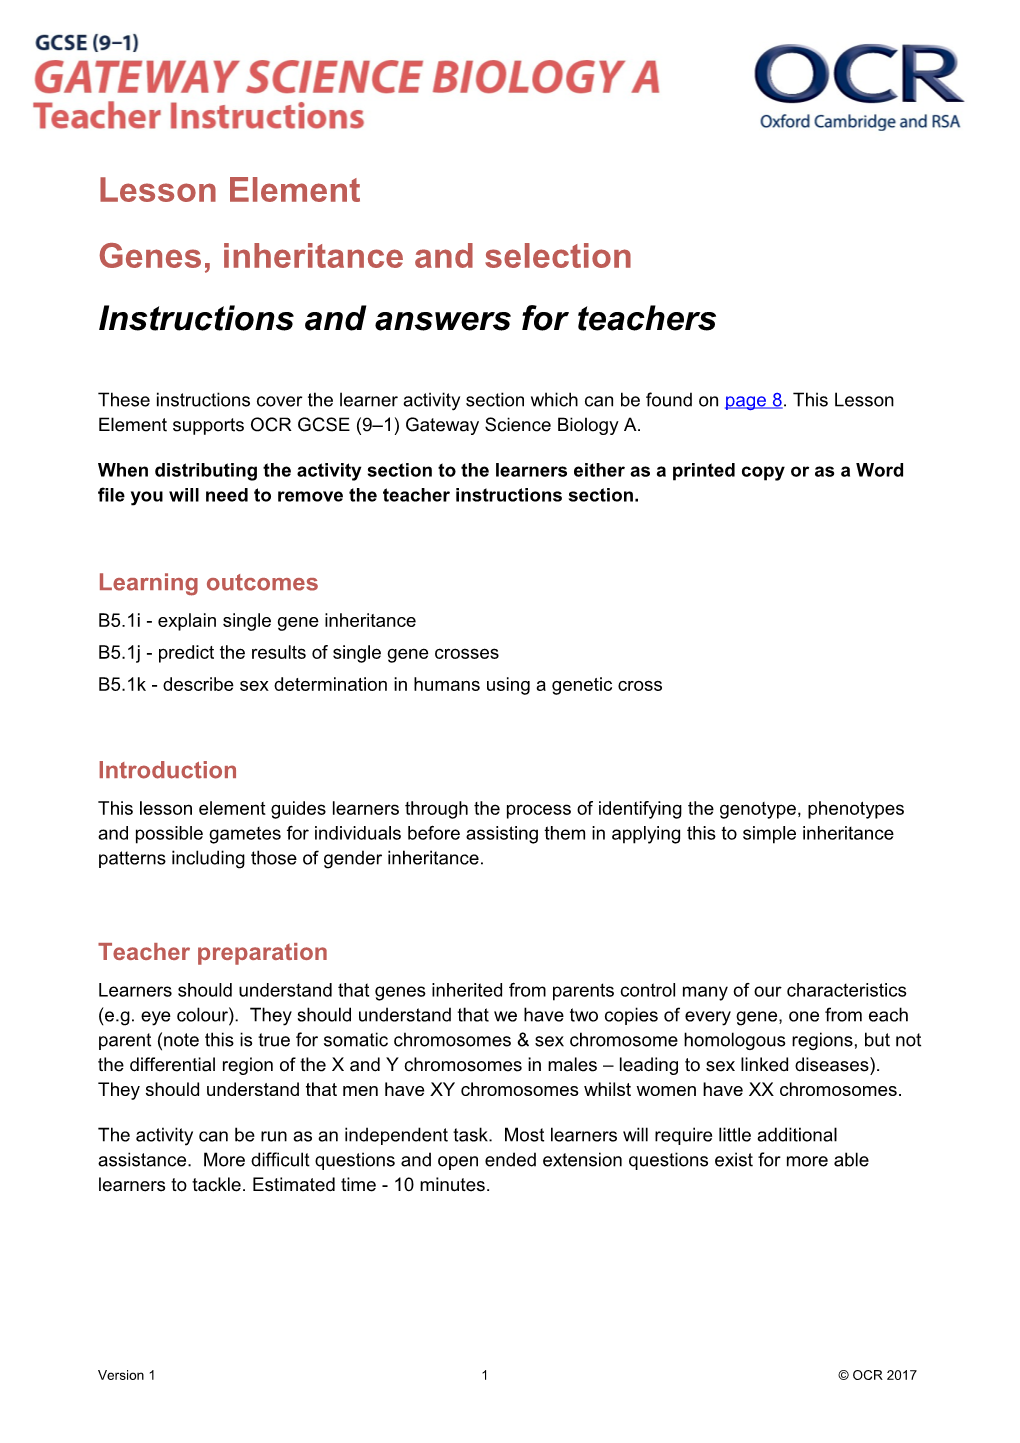 OCR GCSE (9-1) Gateway Science Biology a Genes, Inheritance and Selection Lesson Element